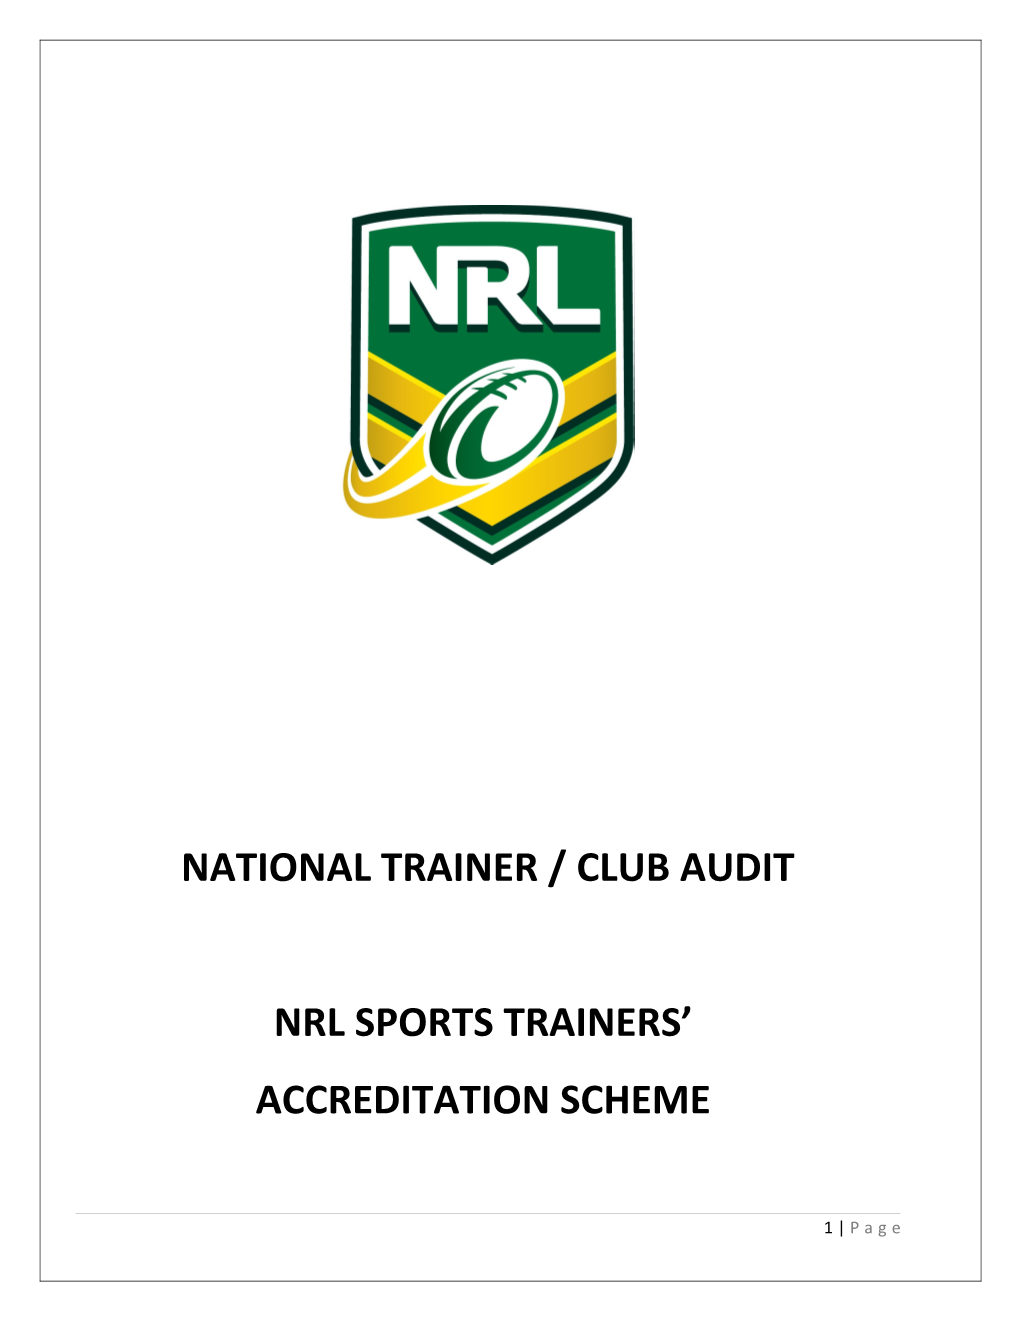 National Trainer / Club Audit